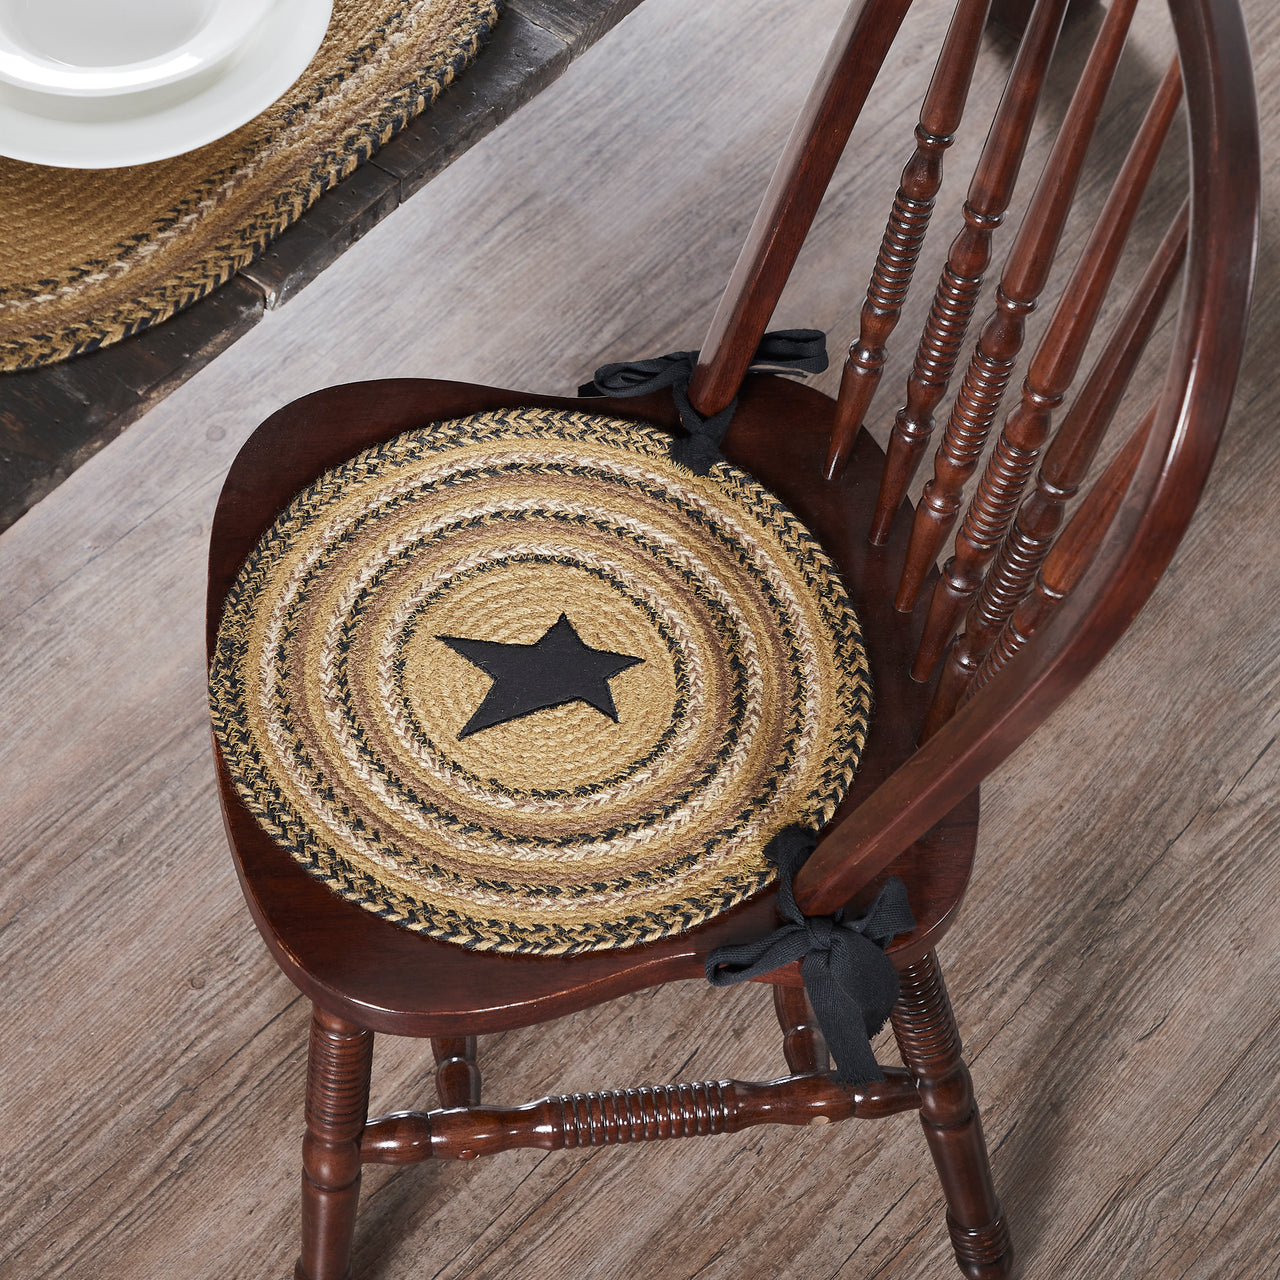 Kettle Grove Jute Braided Chair Pad Applique Star 15" VHC Brands